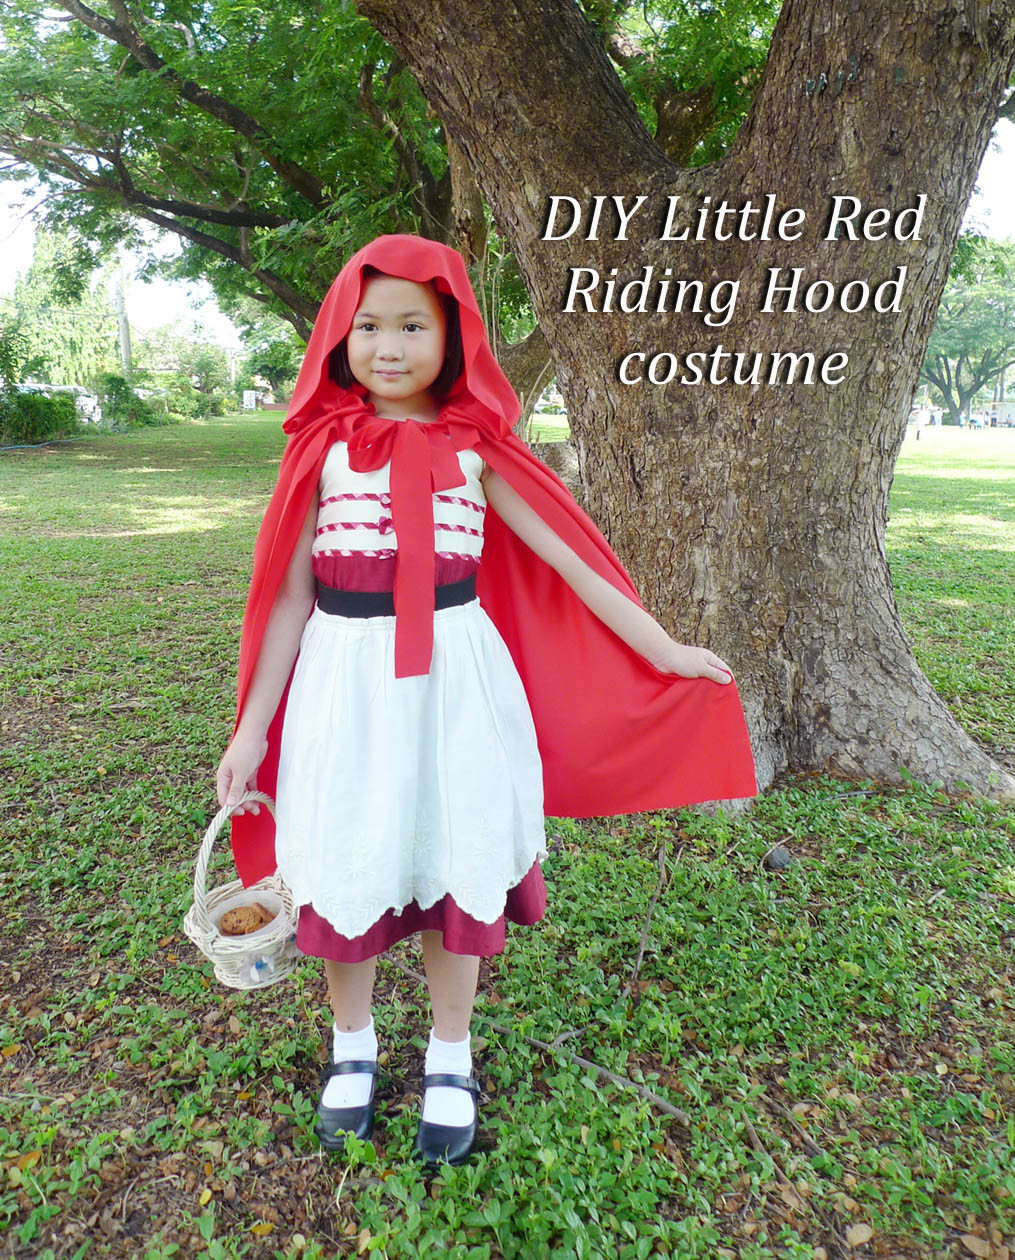 Little Red Riding Hood Costume DIY
 MrsMommyHolic DIY Little Red Riding Hood Costume